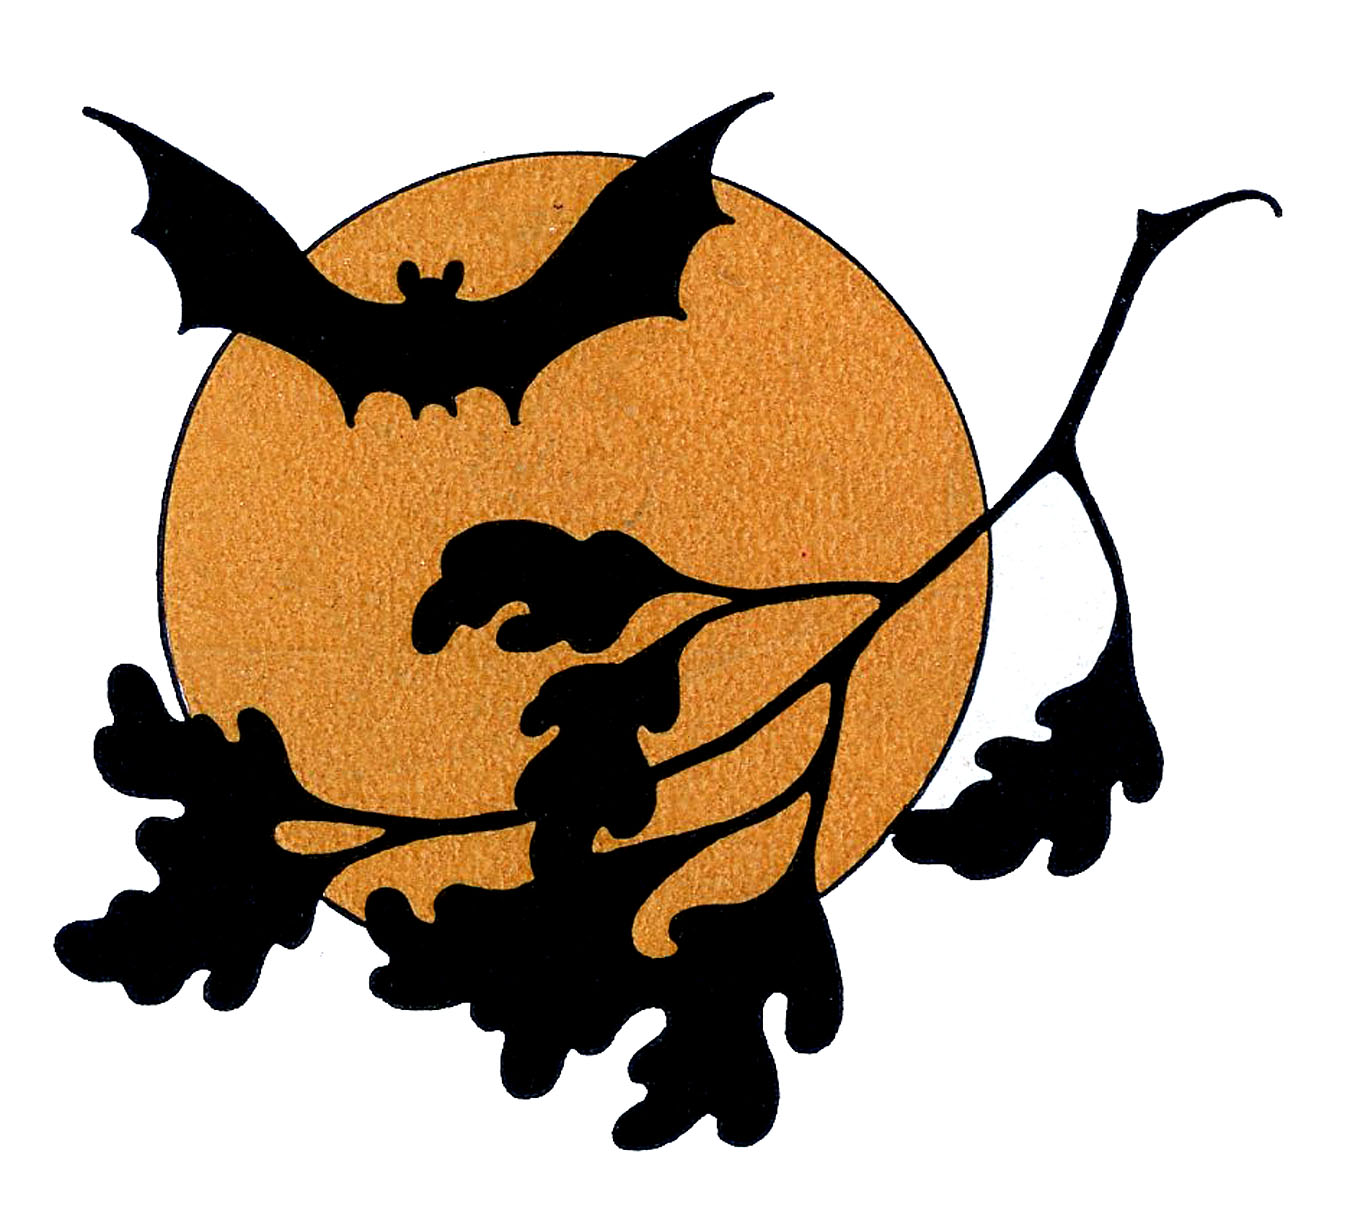 Vintage Halloween Clip Art - Bat with Moon - The Graphics Fairy